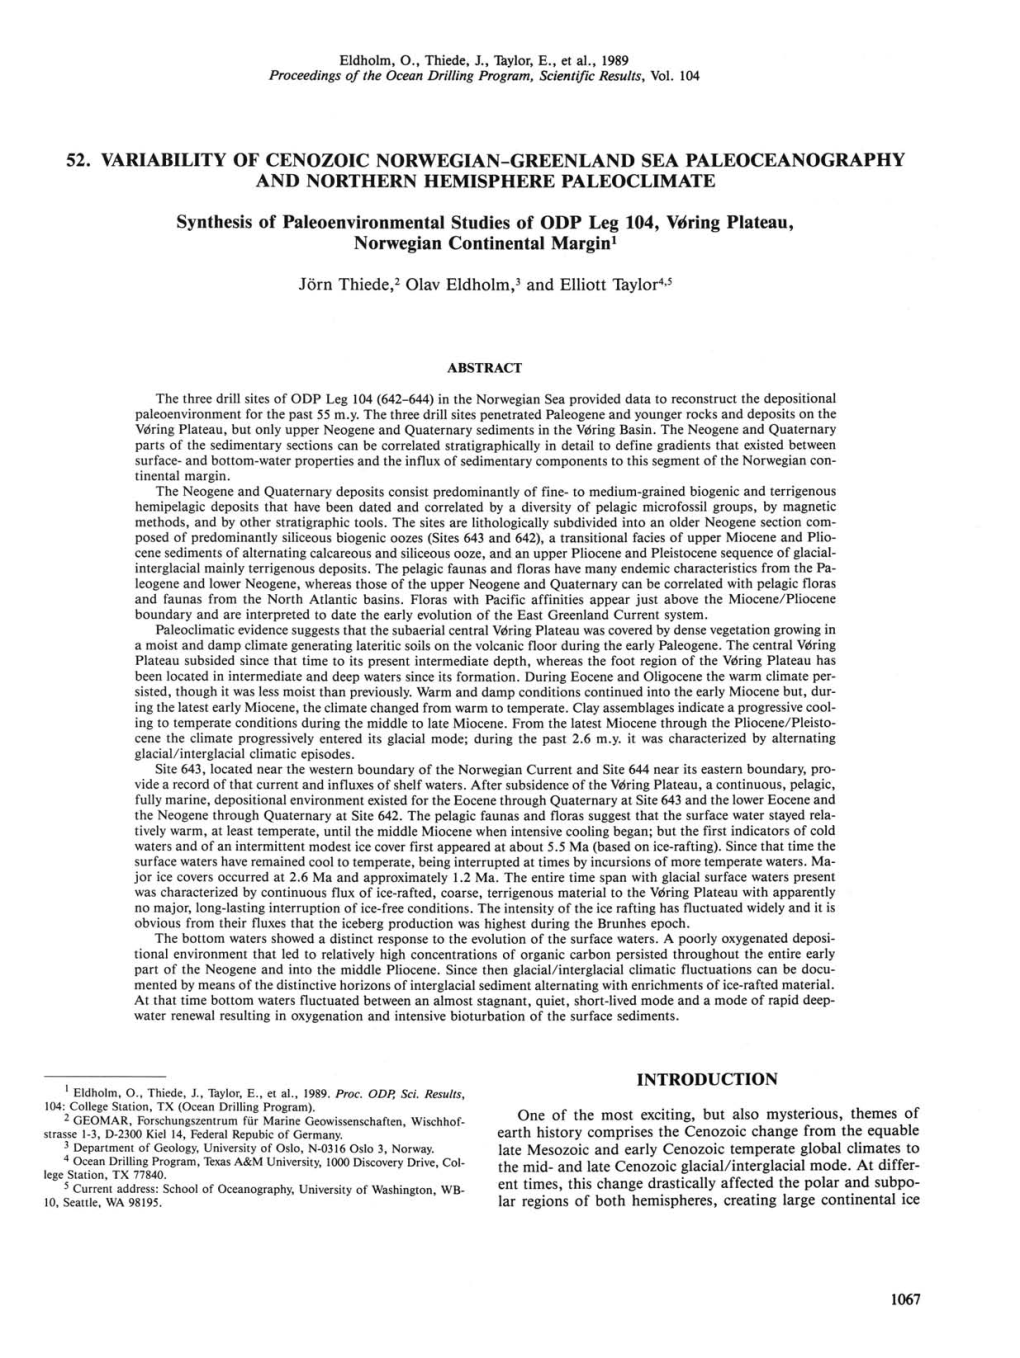 52. Variability of Cenozoic Norwegian-Greenland Sea Paleoceanography and Northern Hemisphere Paleoclimate